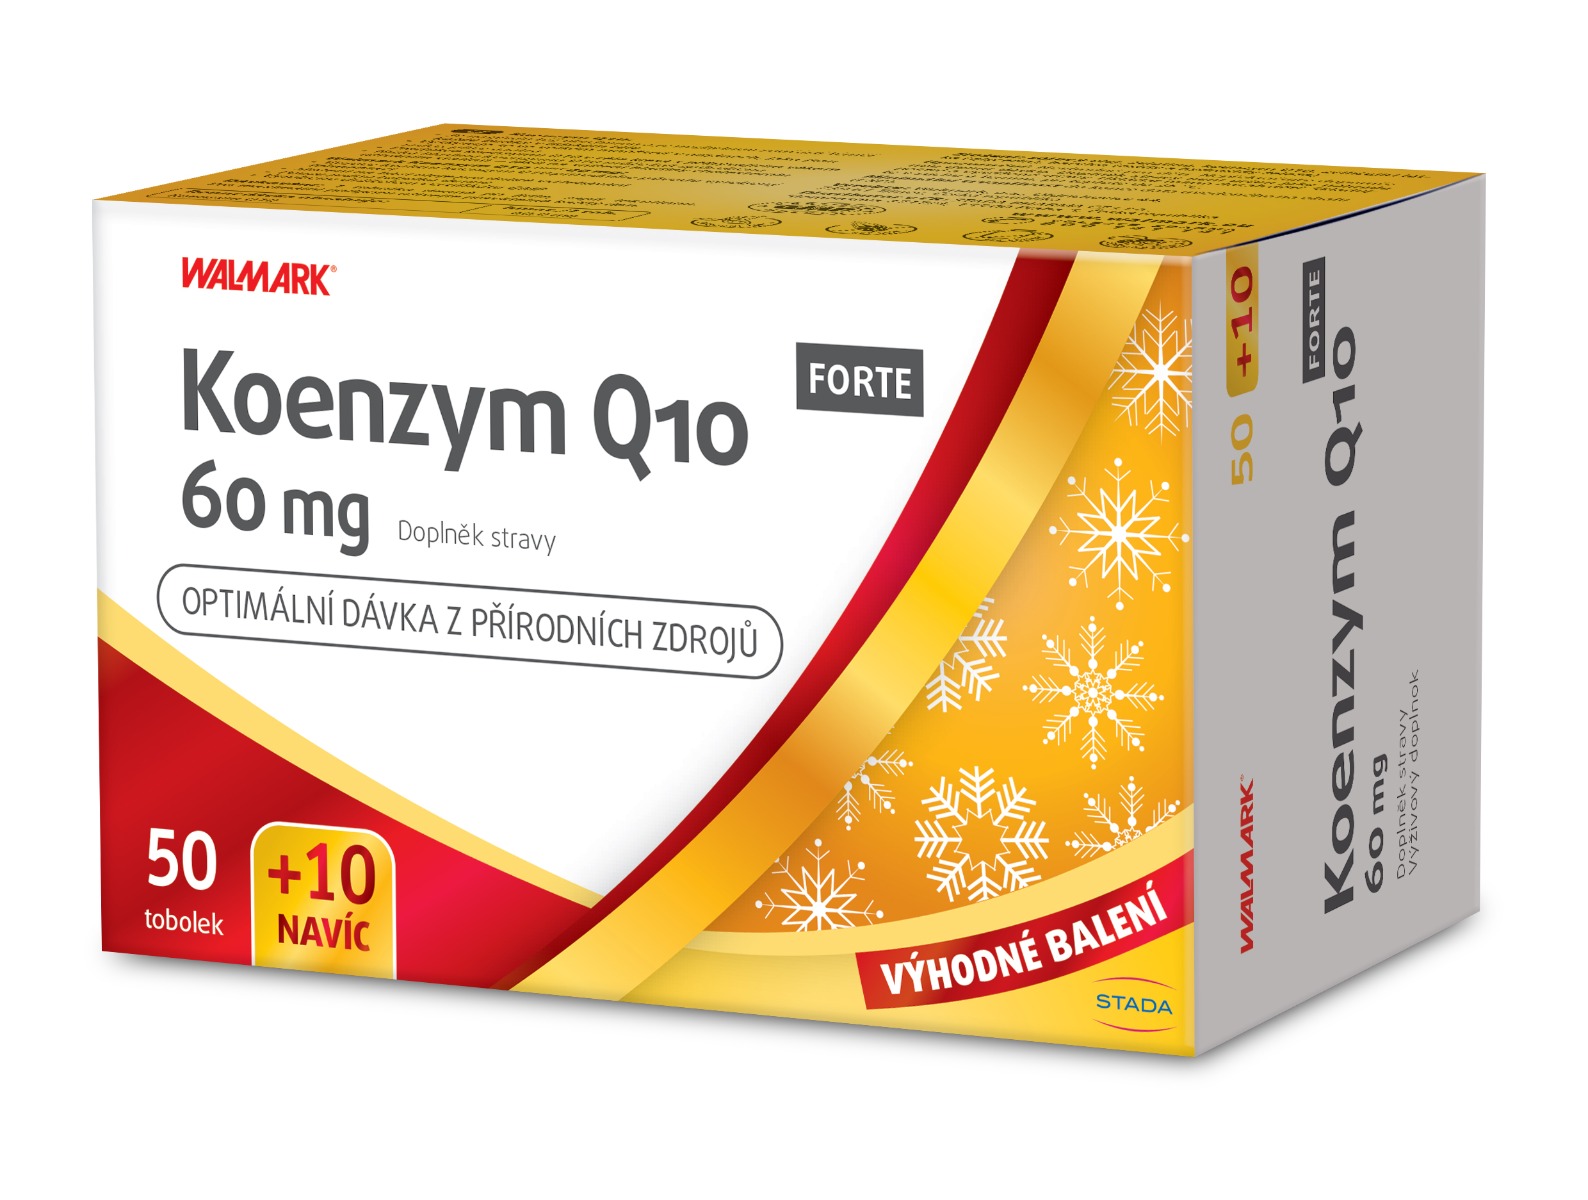 Walmark Koenzym Q10 FORTE 60 mg 50+10 tobolek Walmark